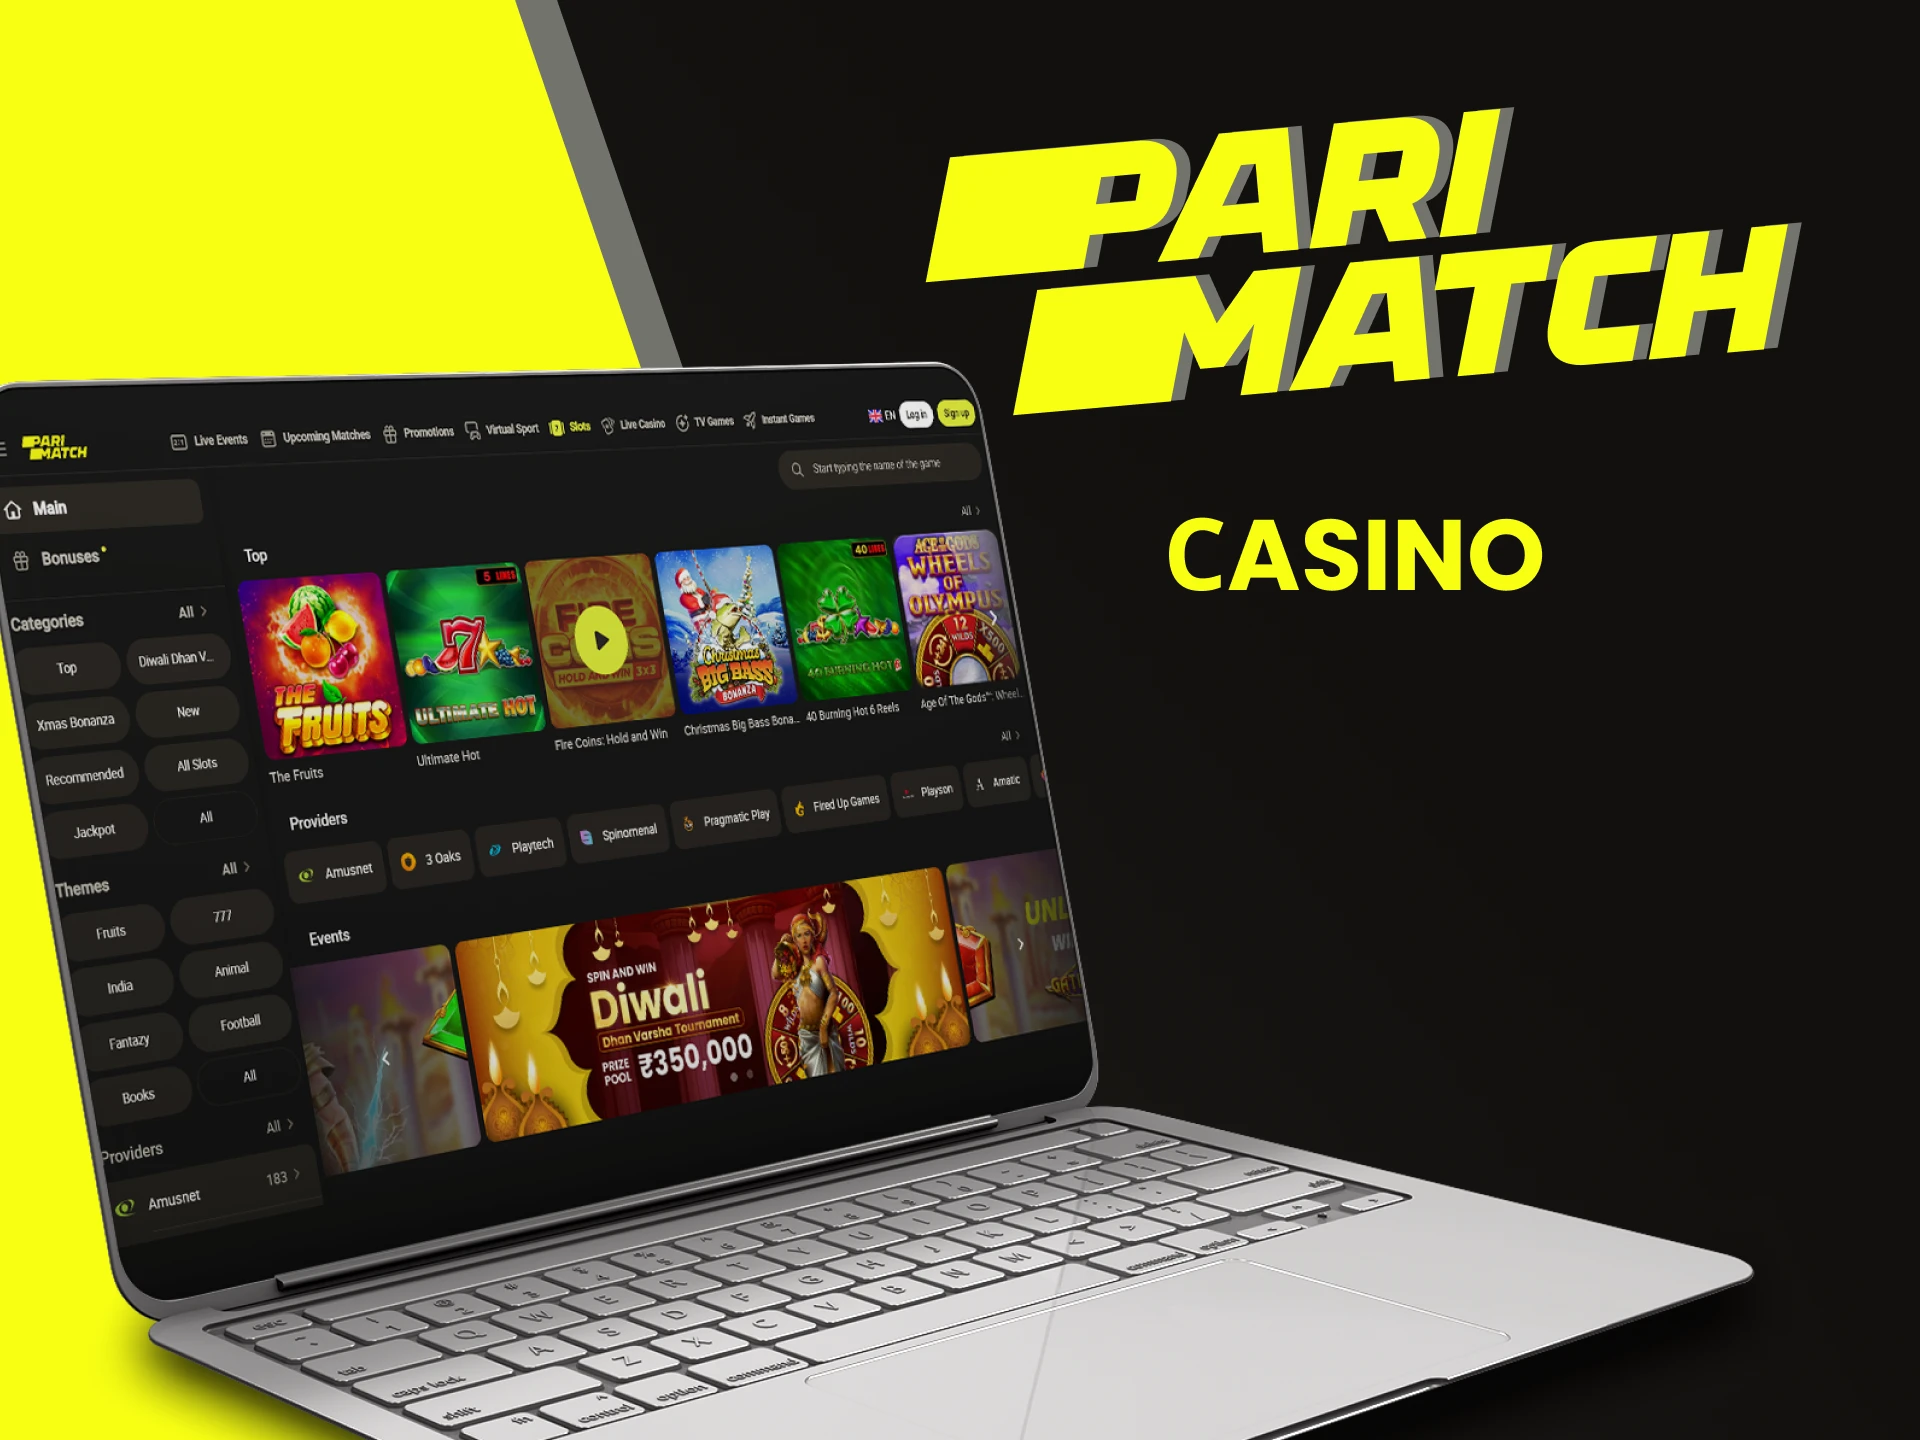 Play casino on the Parimatch website.